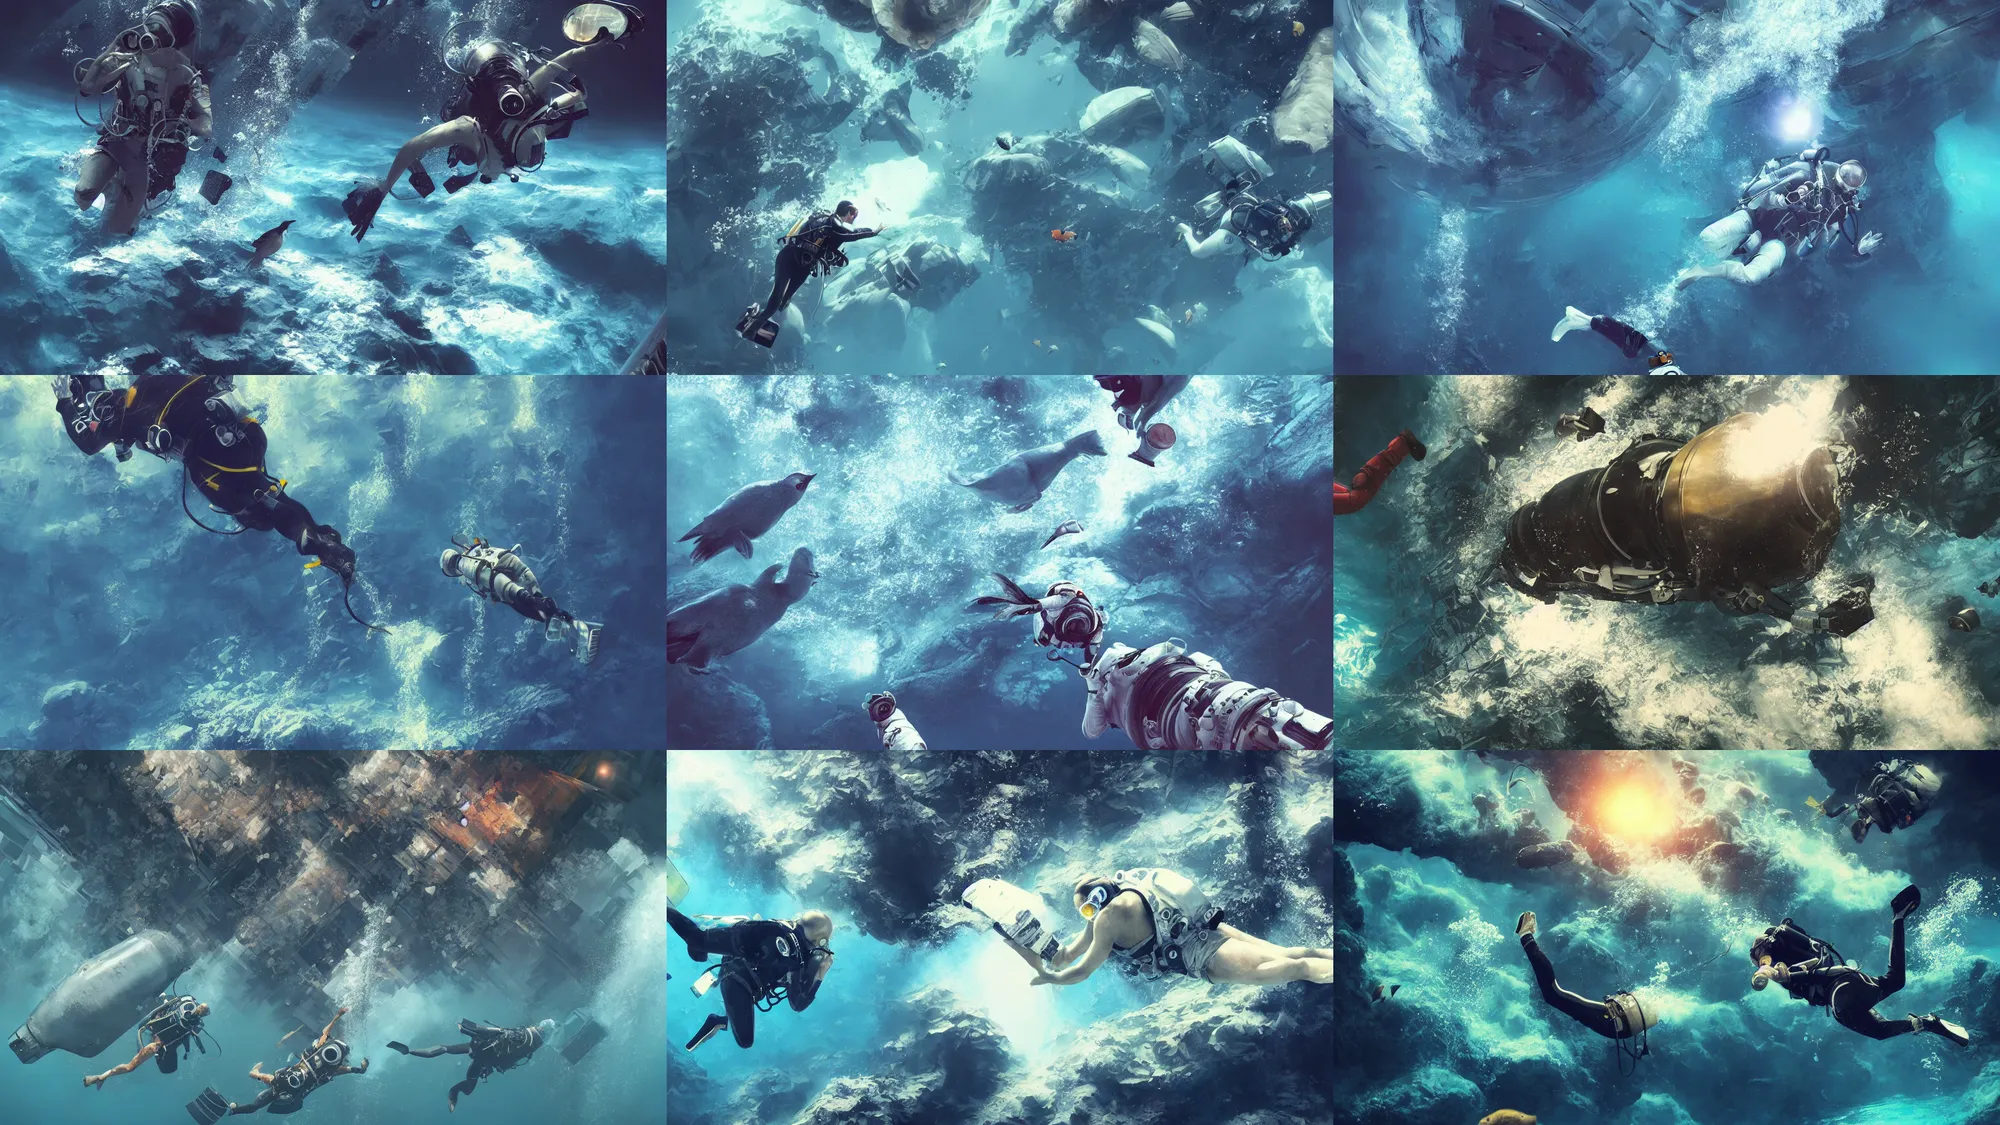 Image similar to astronaut diving underwater, deep sea, waterfall, birds, cinematic, hyper-realistic, high resolution, concept art, artstation